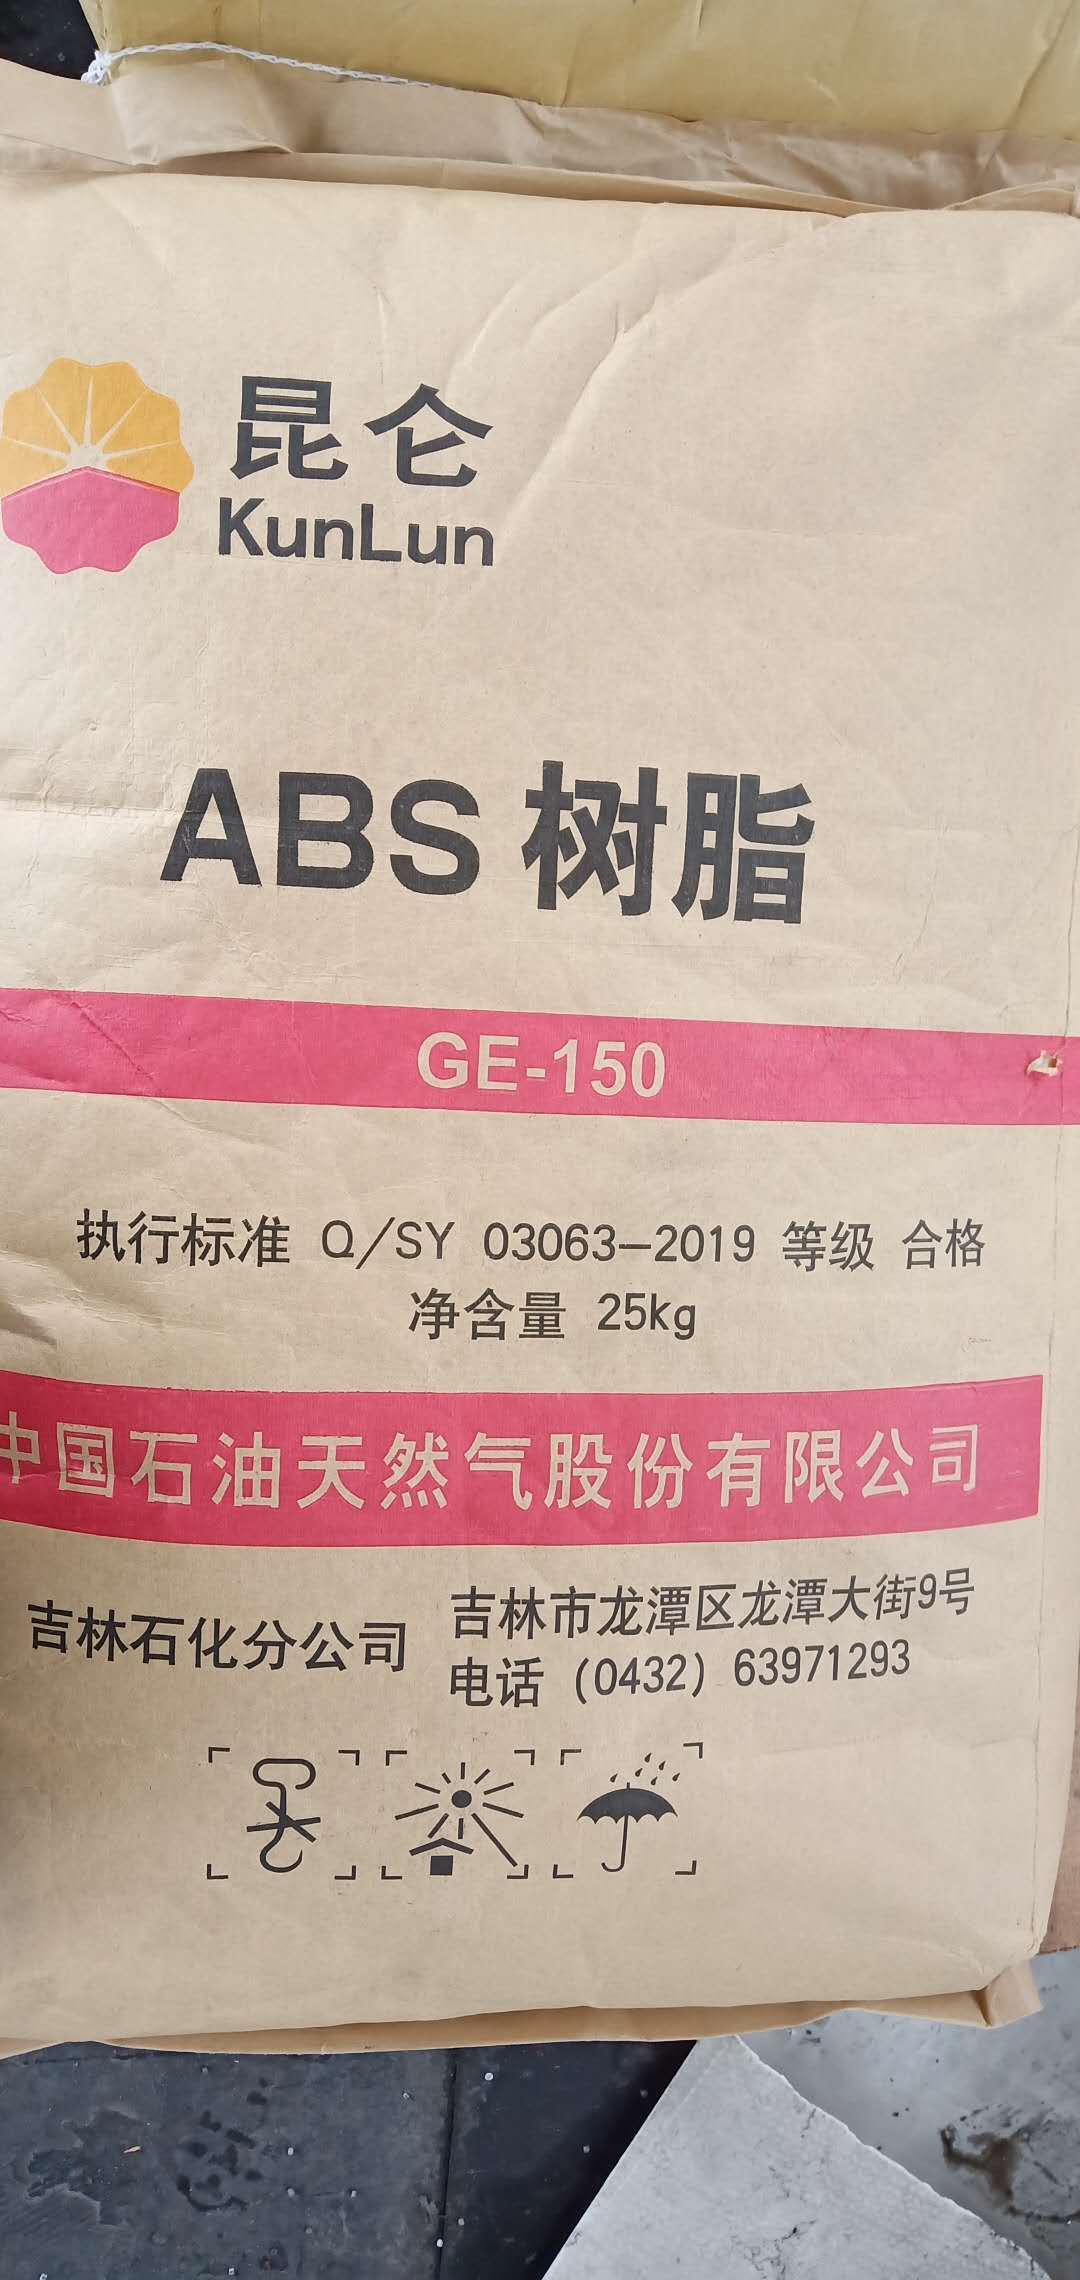 GE-150 中石油吉林 昆仑ABS树脂20183B-5